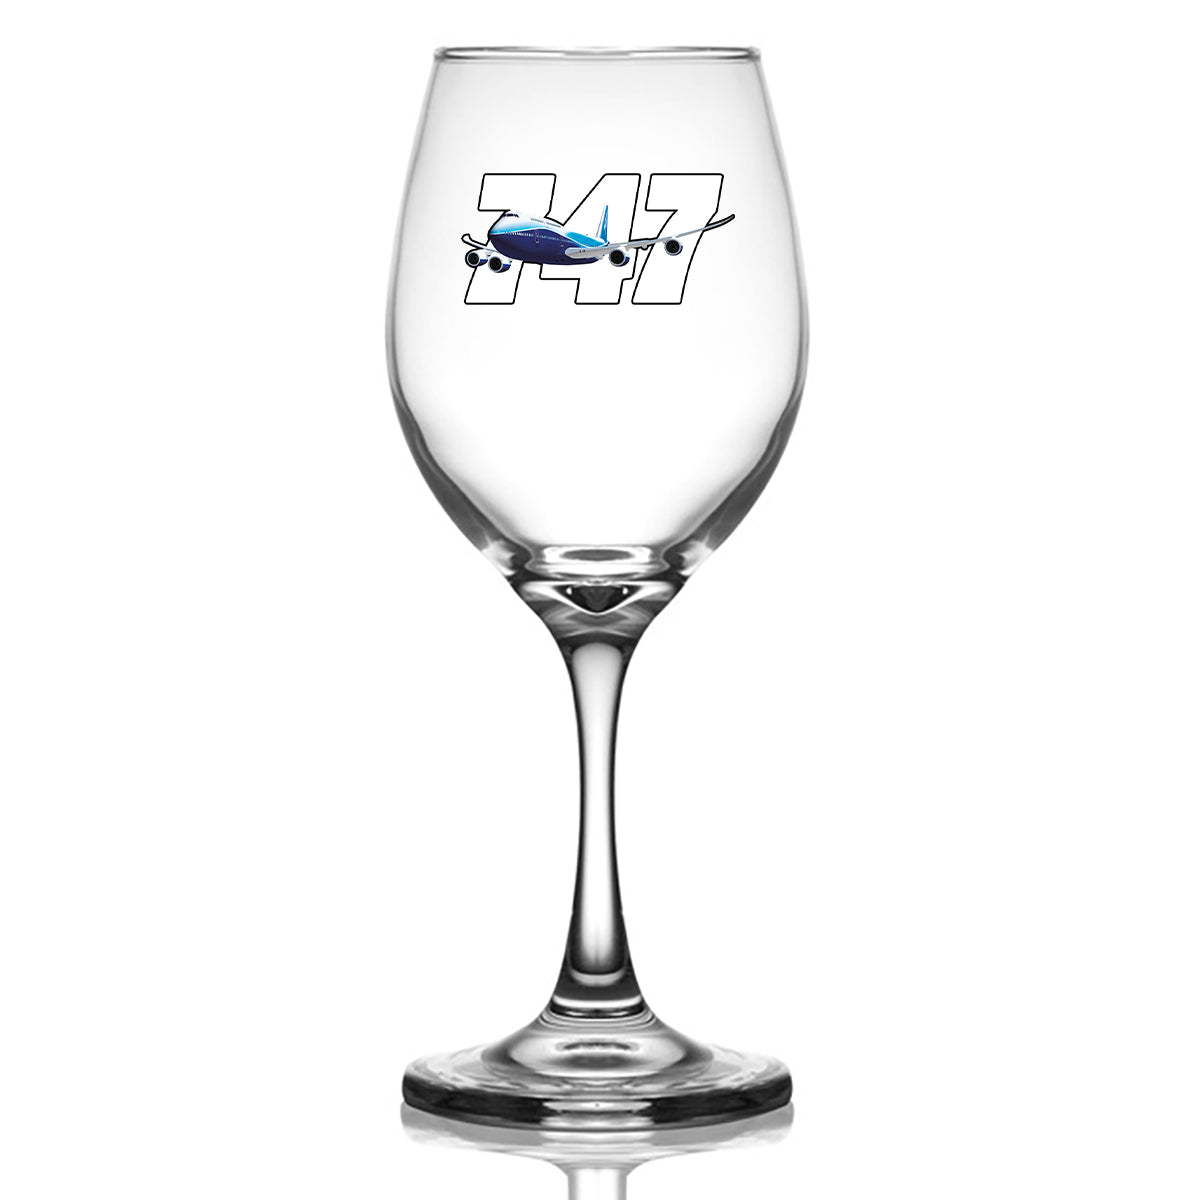 Super Boeing 747 Designed Wine Glasses